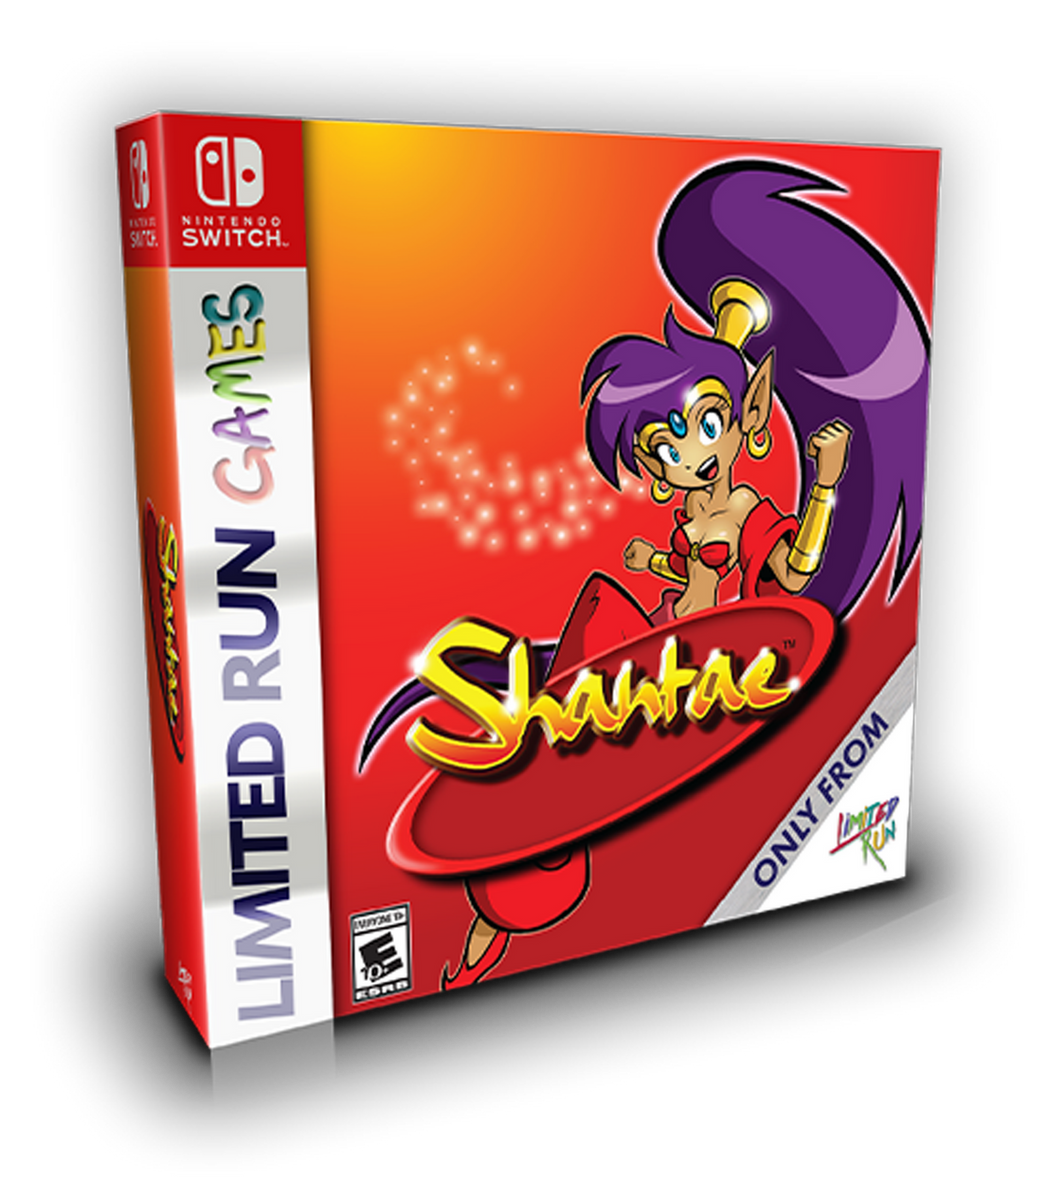 Shantae Retro box Edition / Limited run games / Switch